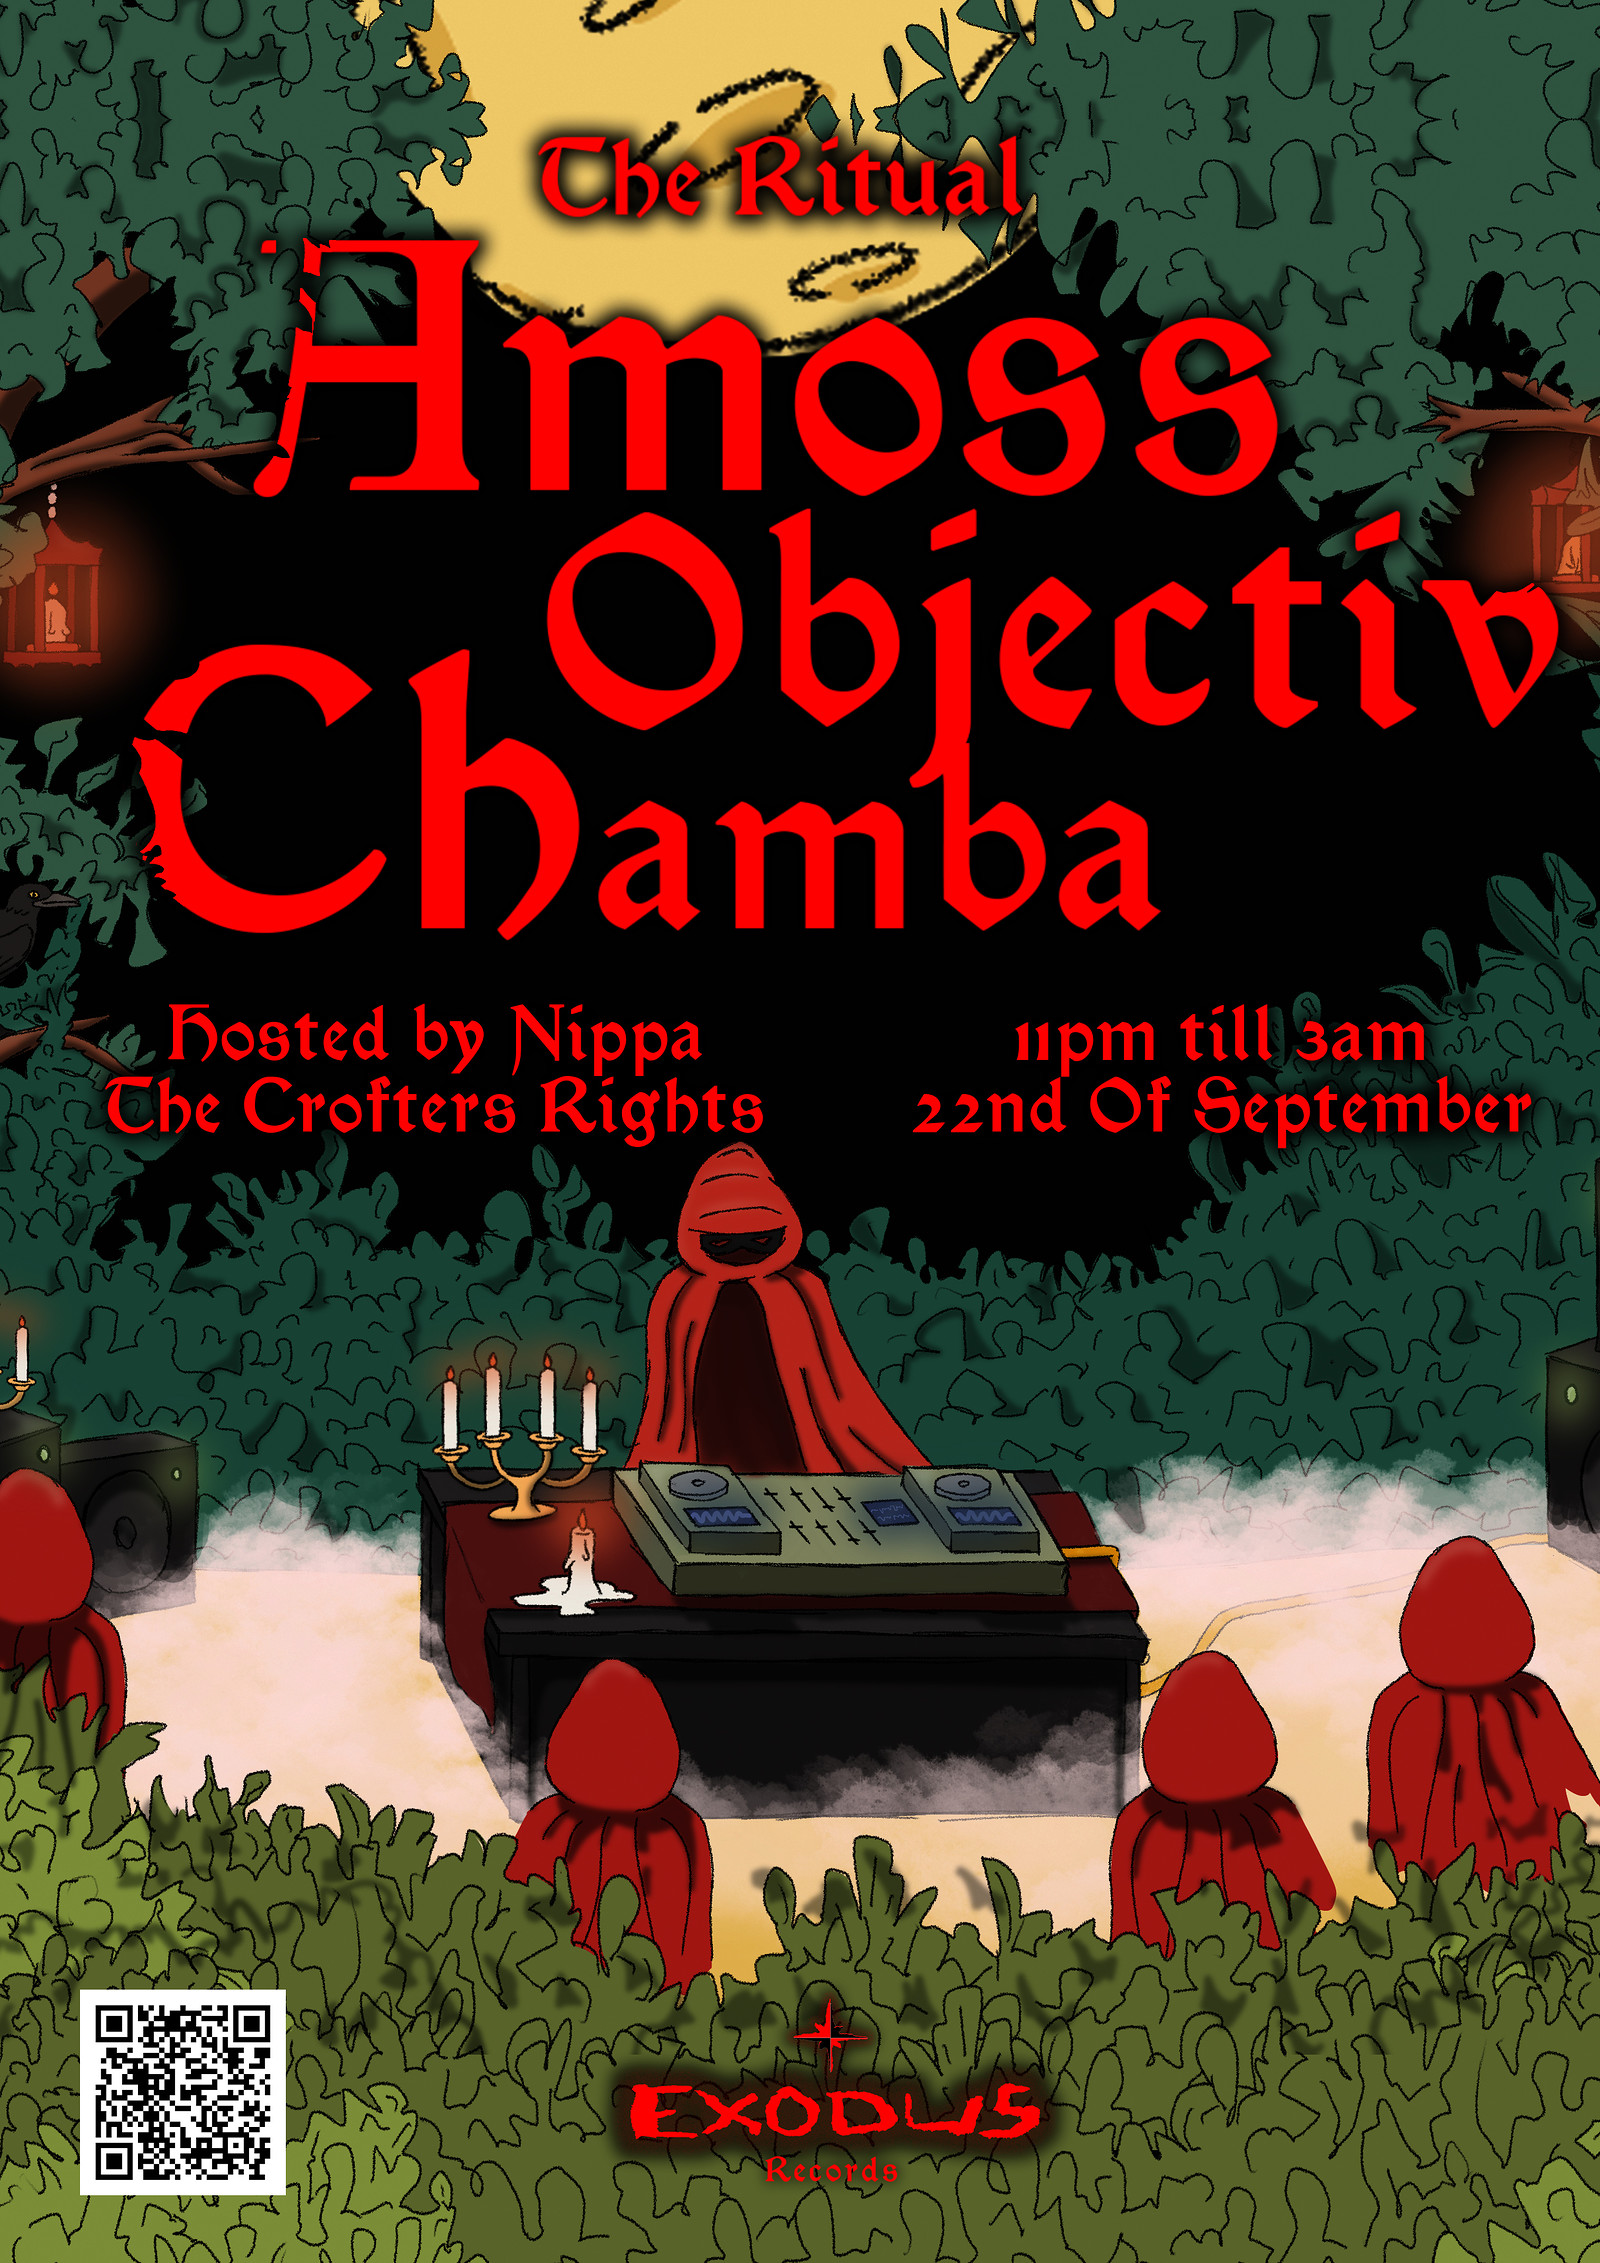 The Ritual - Amoss, Objectiv & Chamba at Crofters Rights